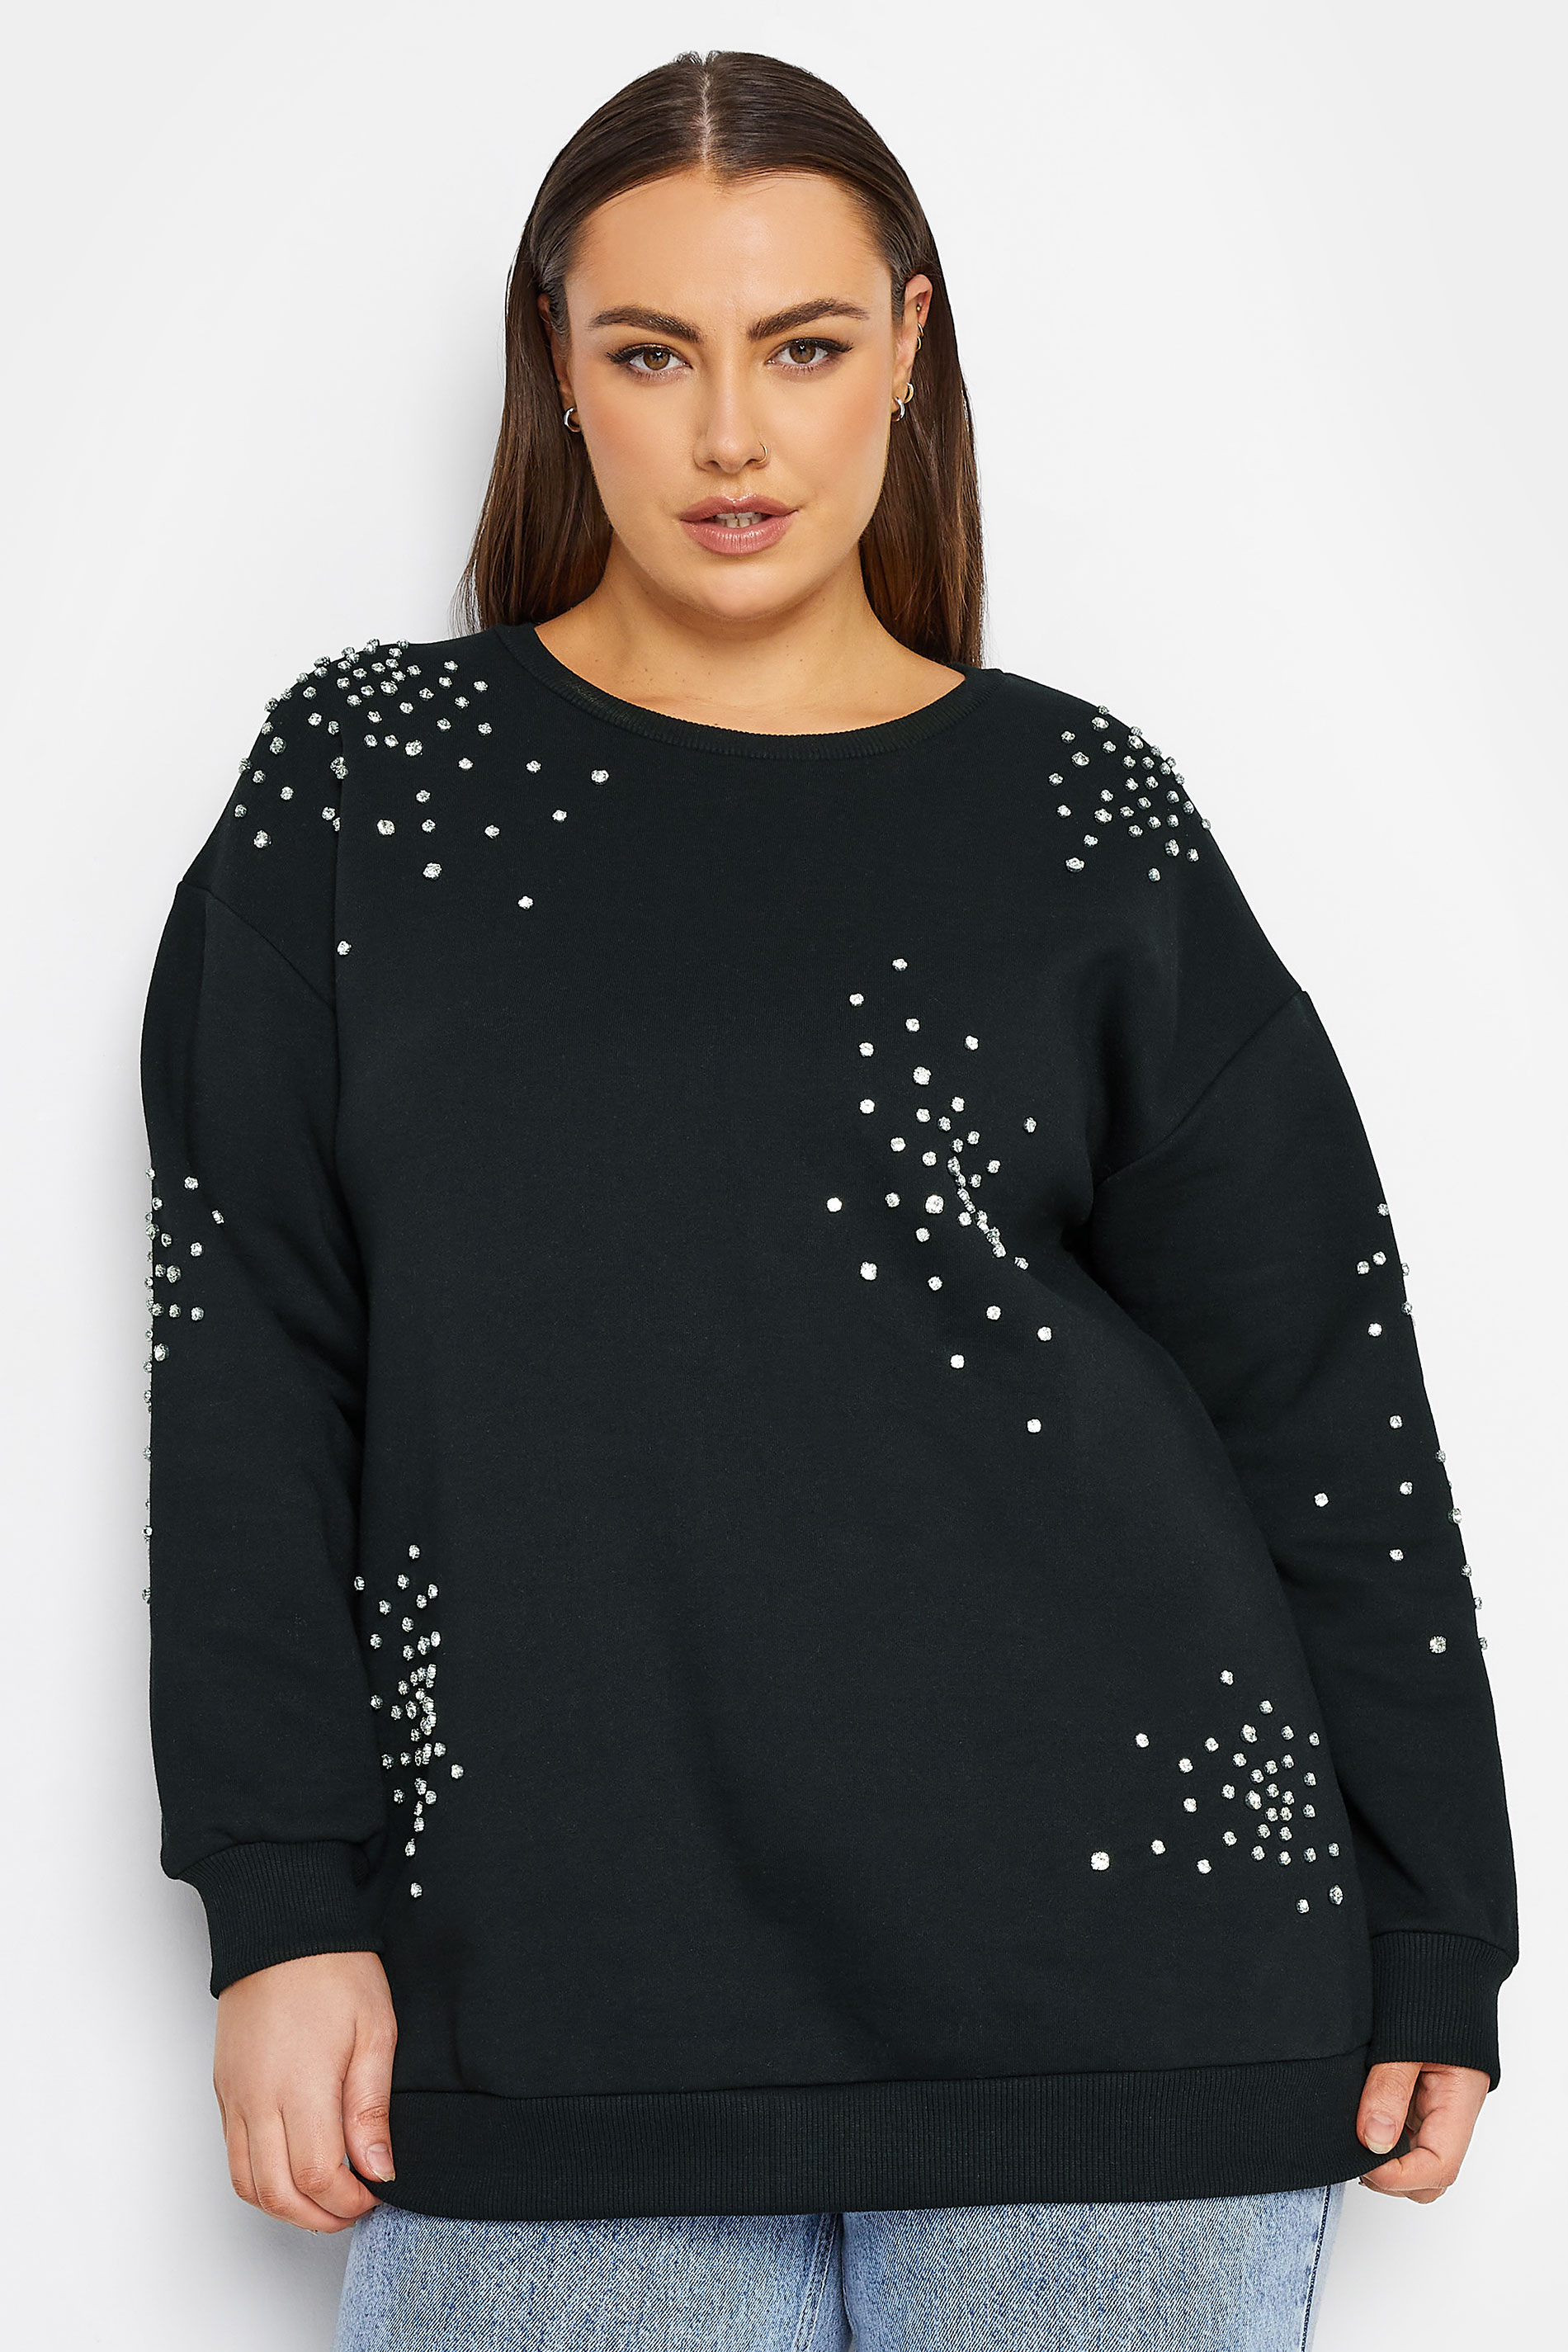 YOURS LUXURY Plus Size Curve Black Sequin Embellished Long Sleeve Sweatshirt | Yours Clothing  2